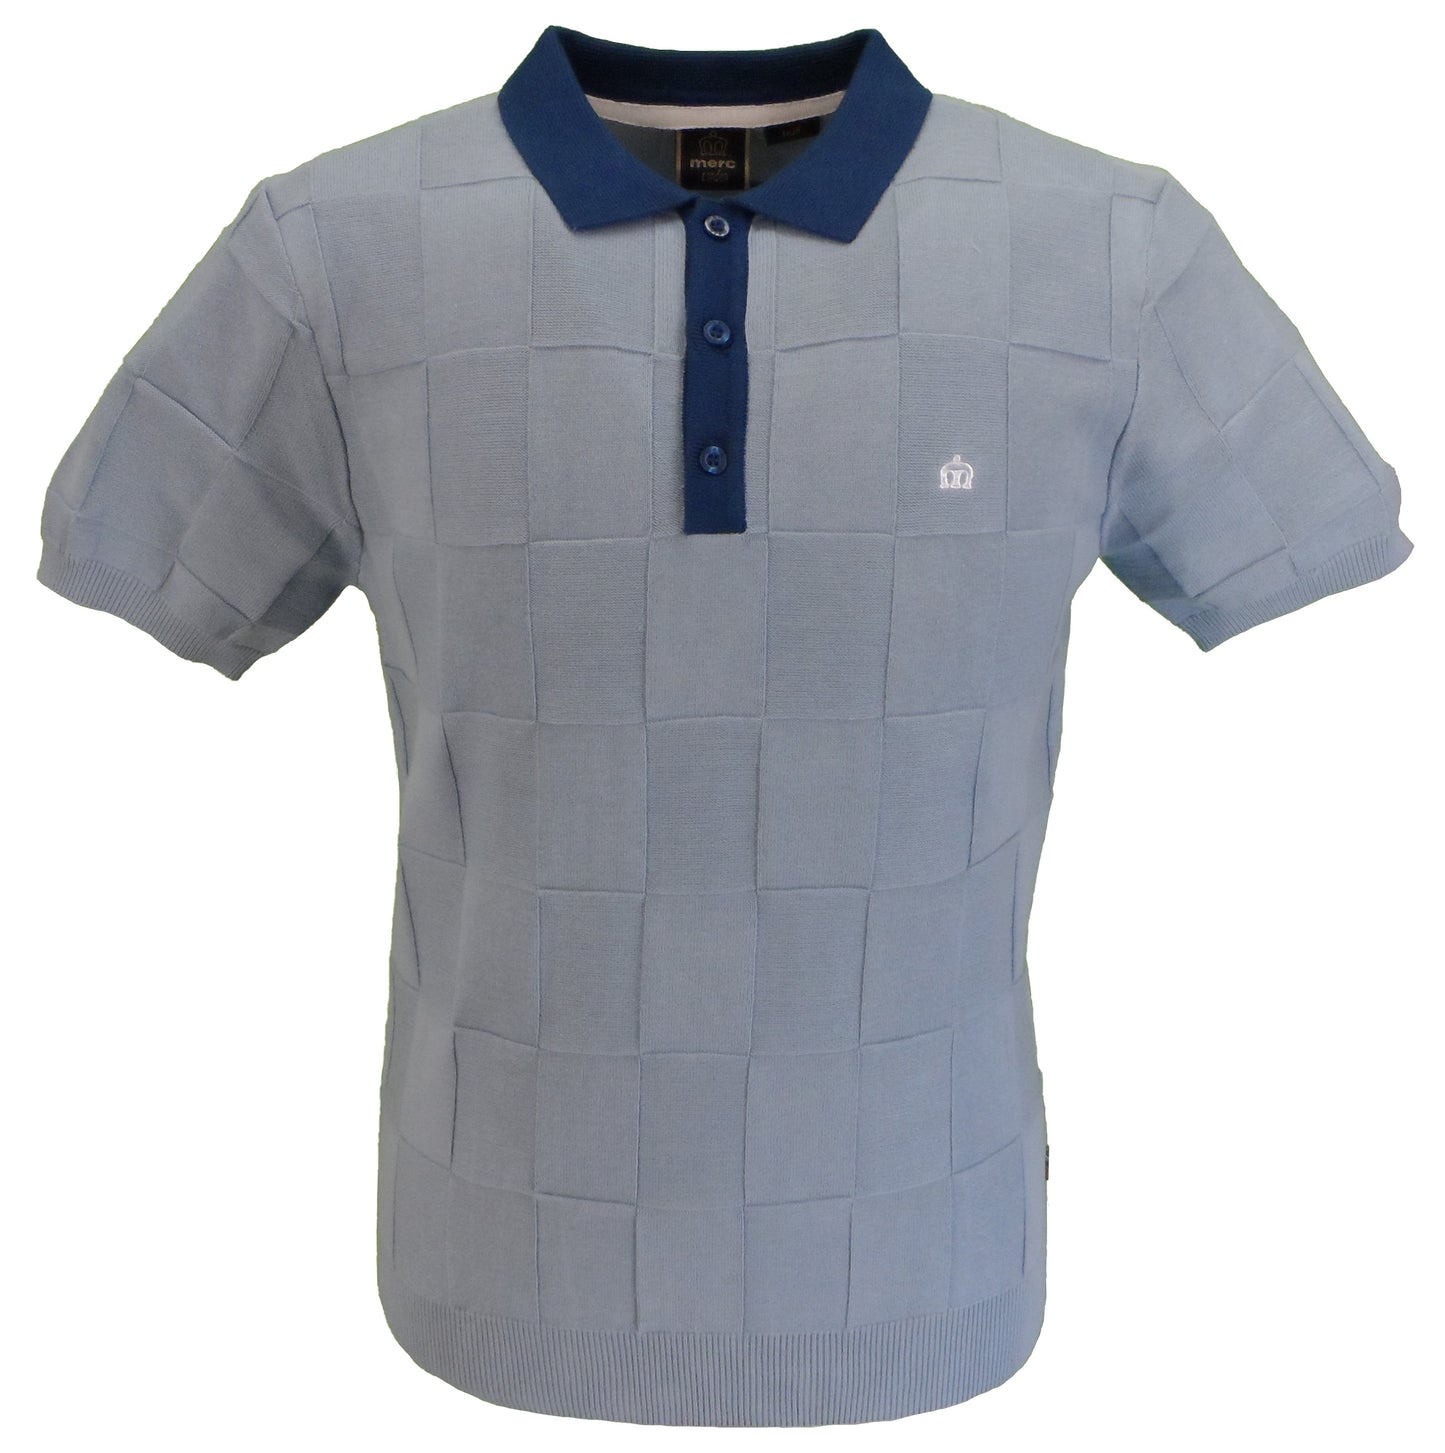 Merc Batley Dust Blue Knitted Vintage Knited Mod Polo Shirts